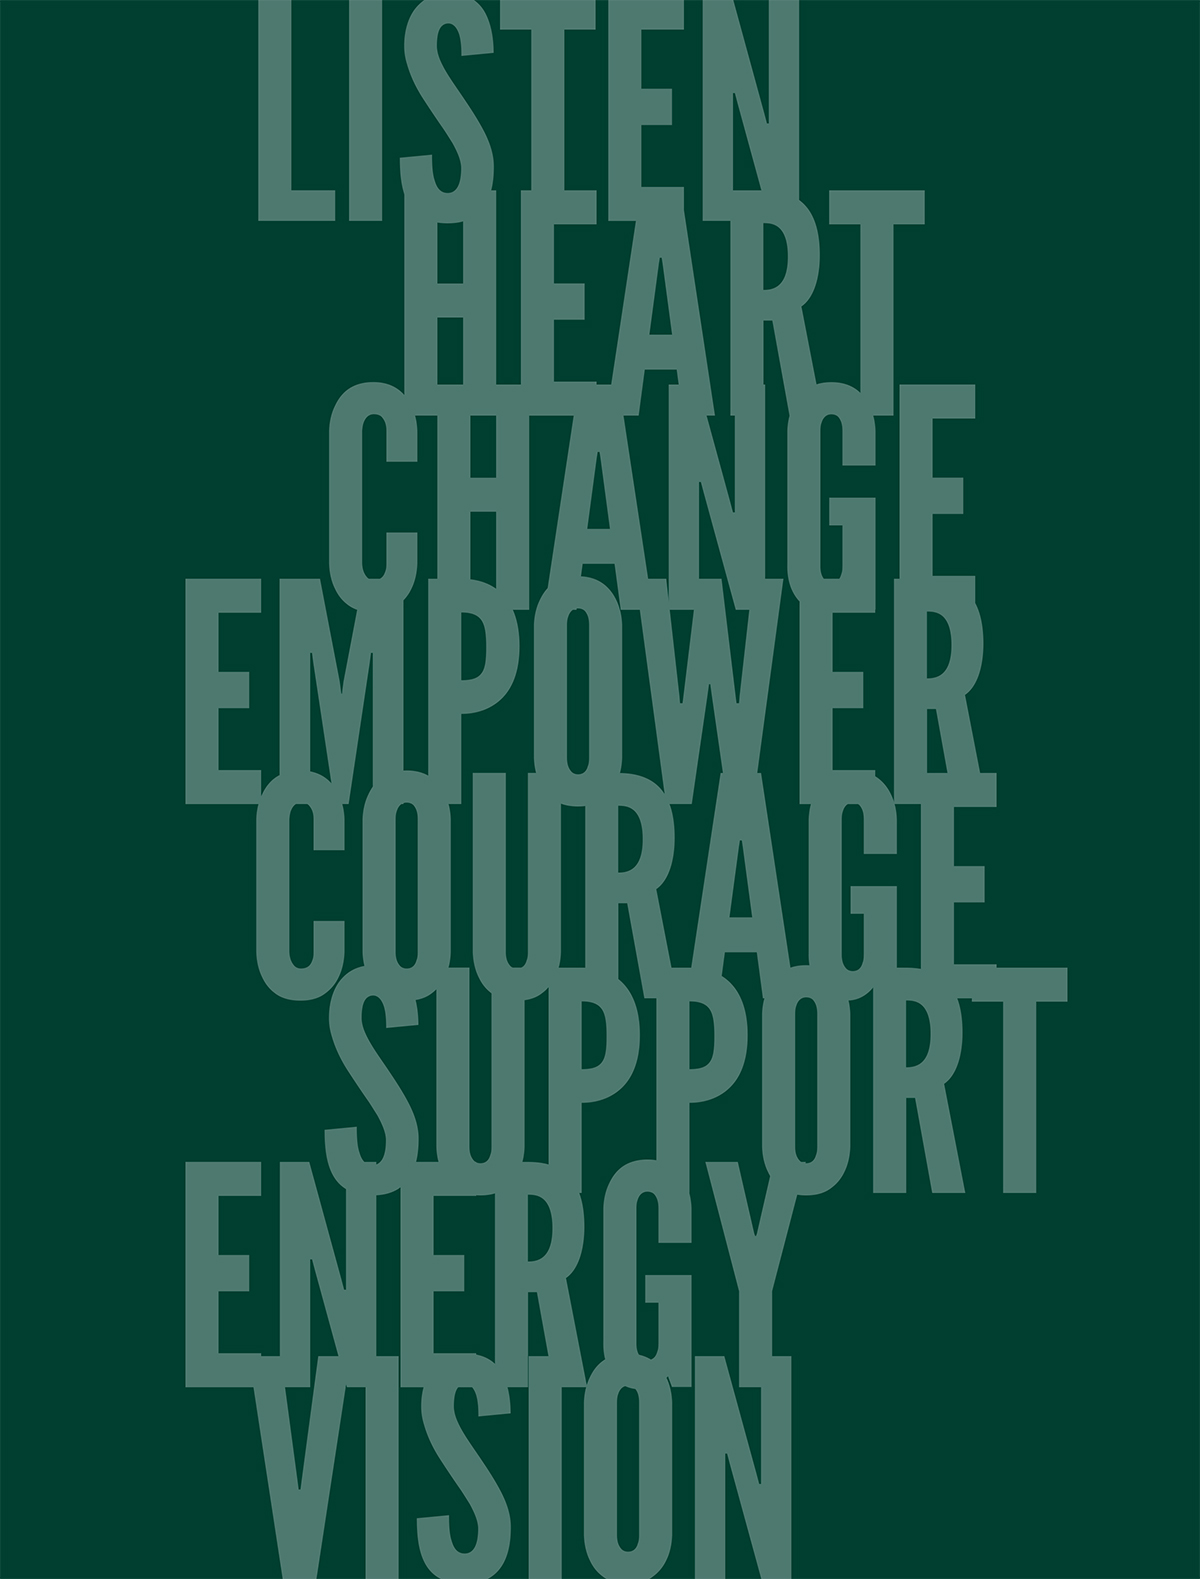 Listen. Heart. Change. Empower. Courage. Support. Energy. Vision.